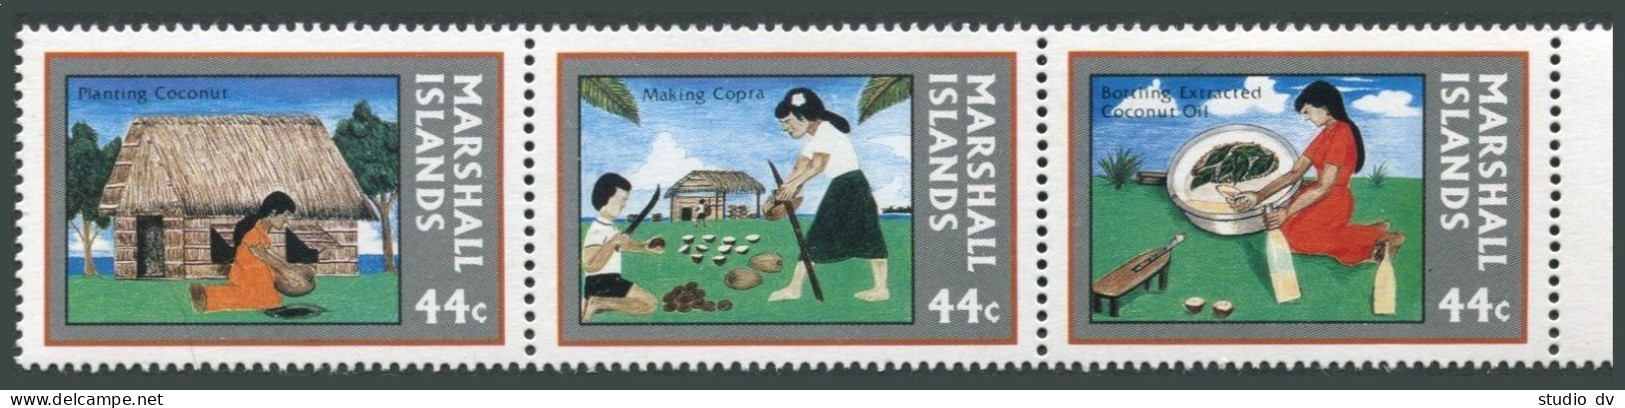 Marshall 157-159a Strip, MNH. Michel 139-141. Copra Industry, 1987. - Marshall Islands